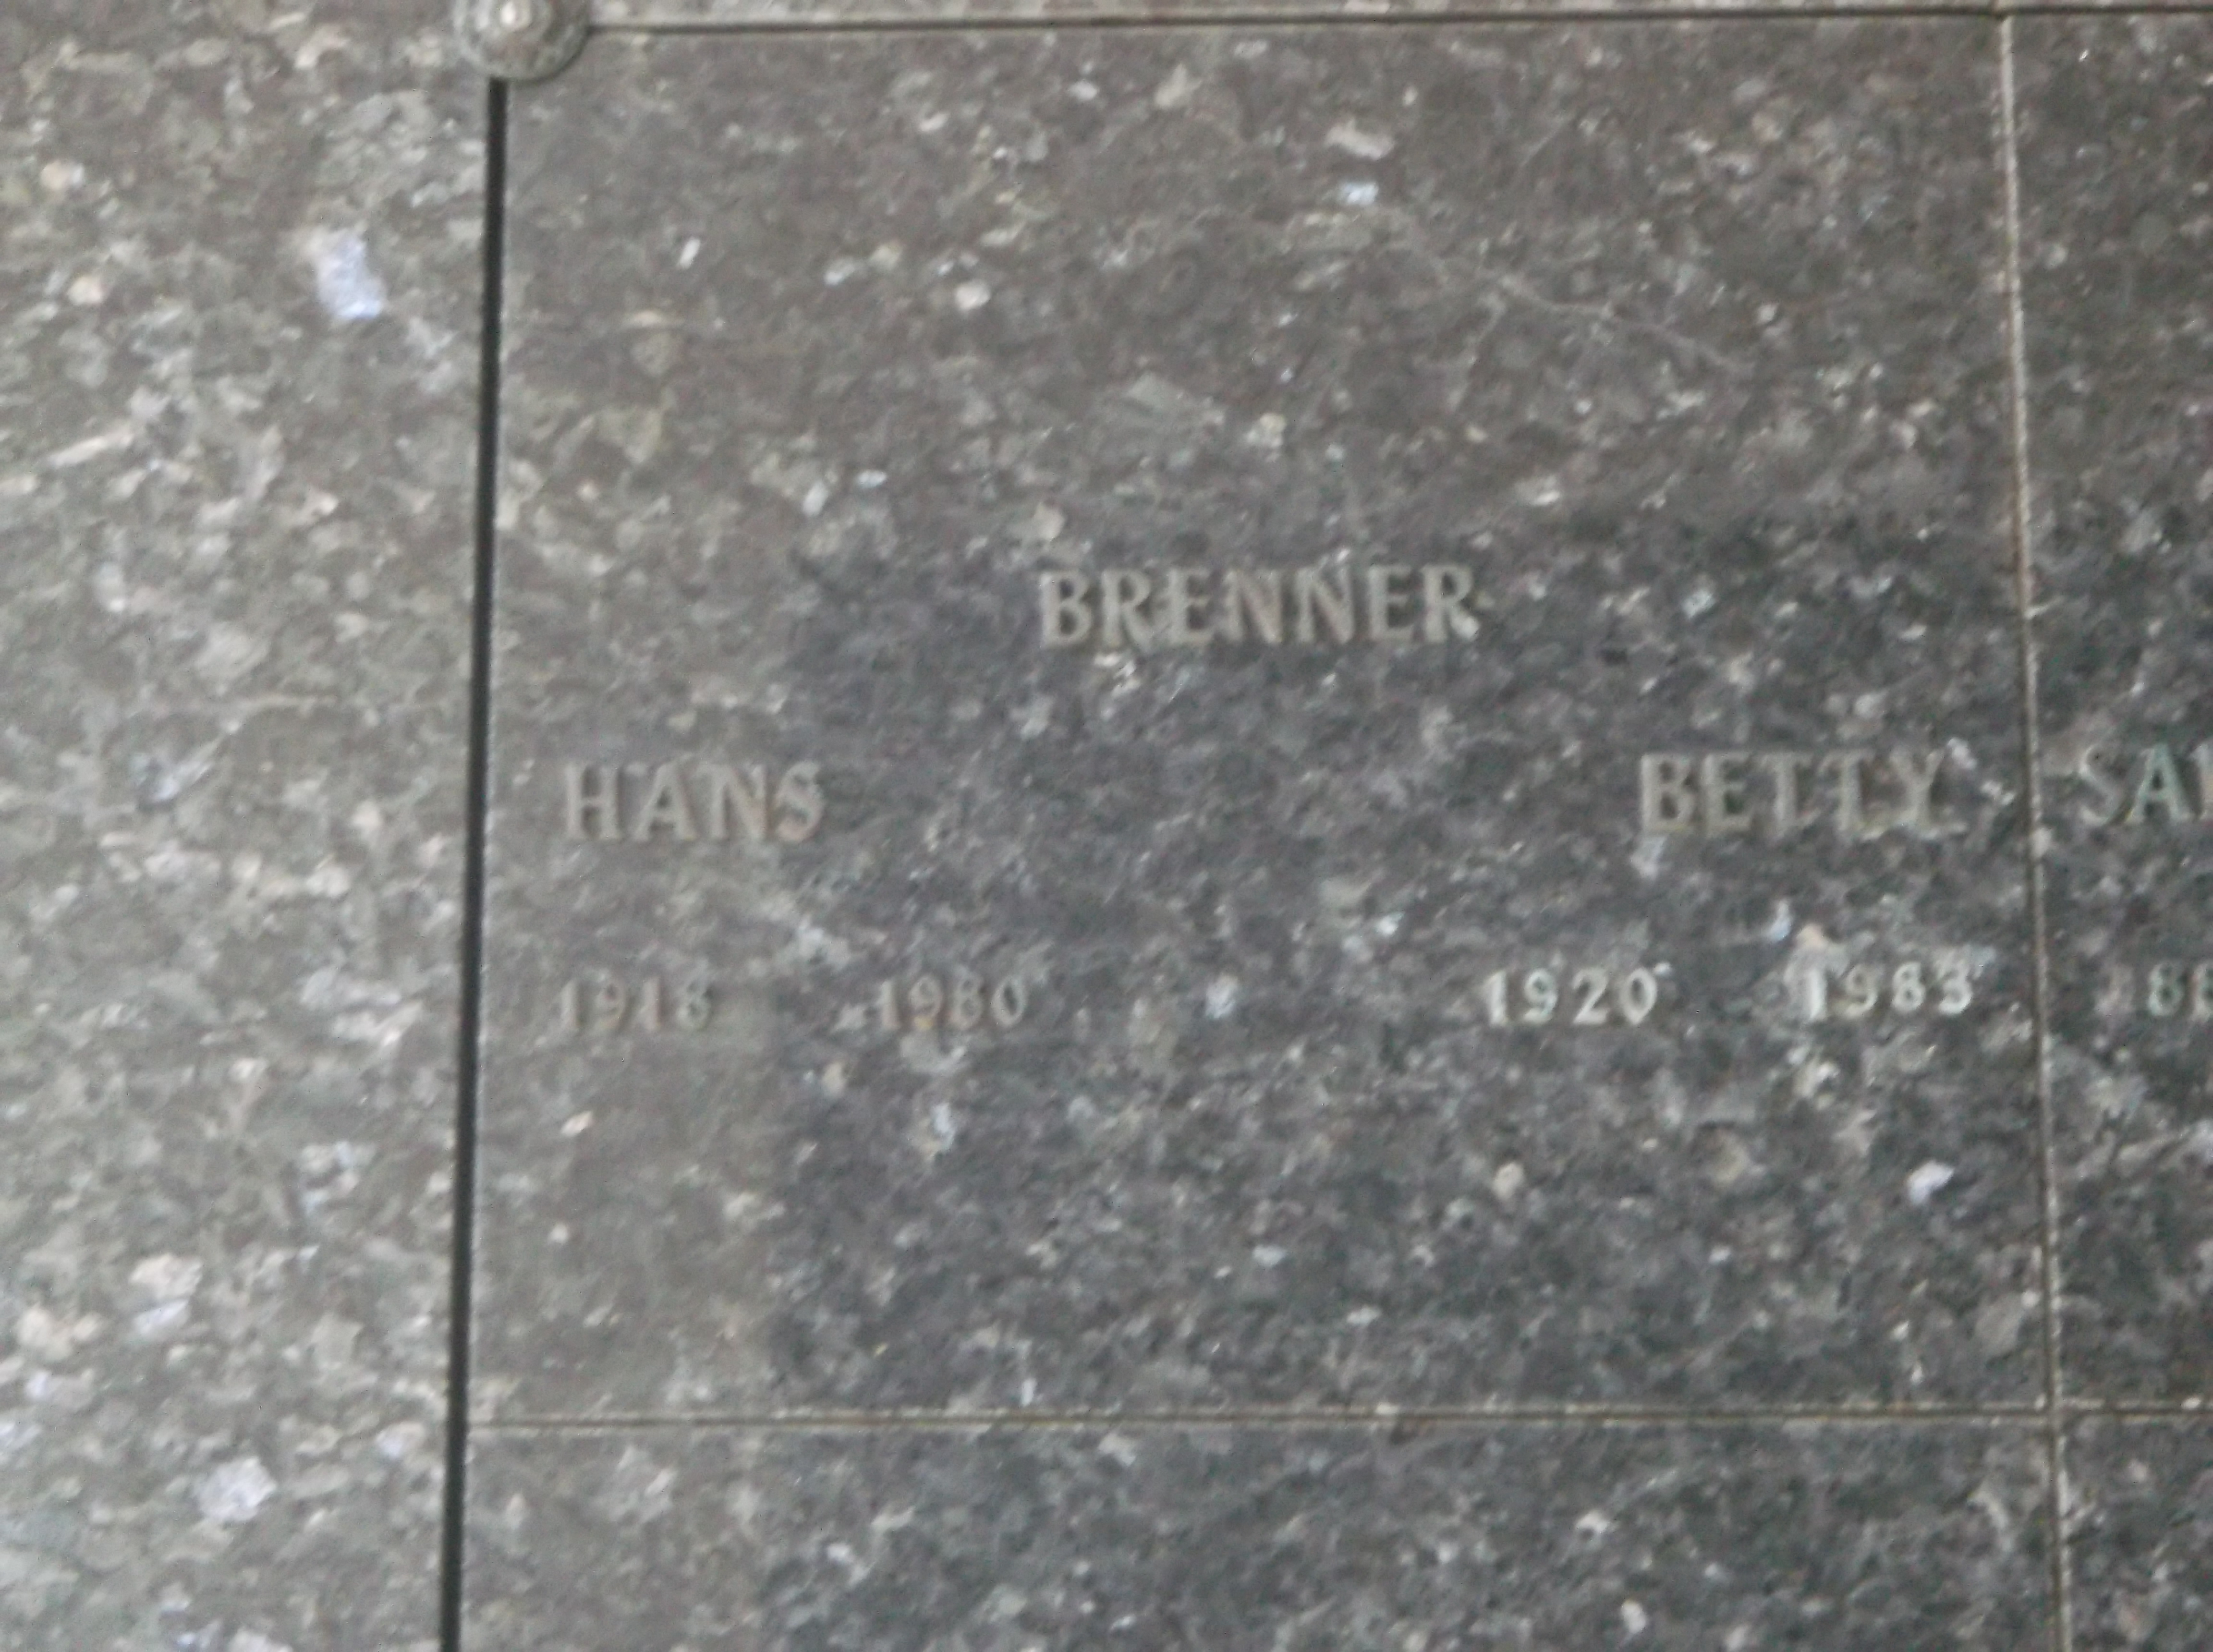 Hans Brenner